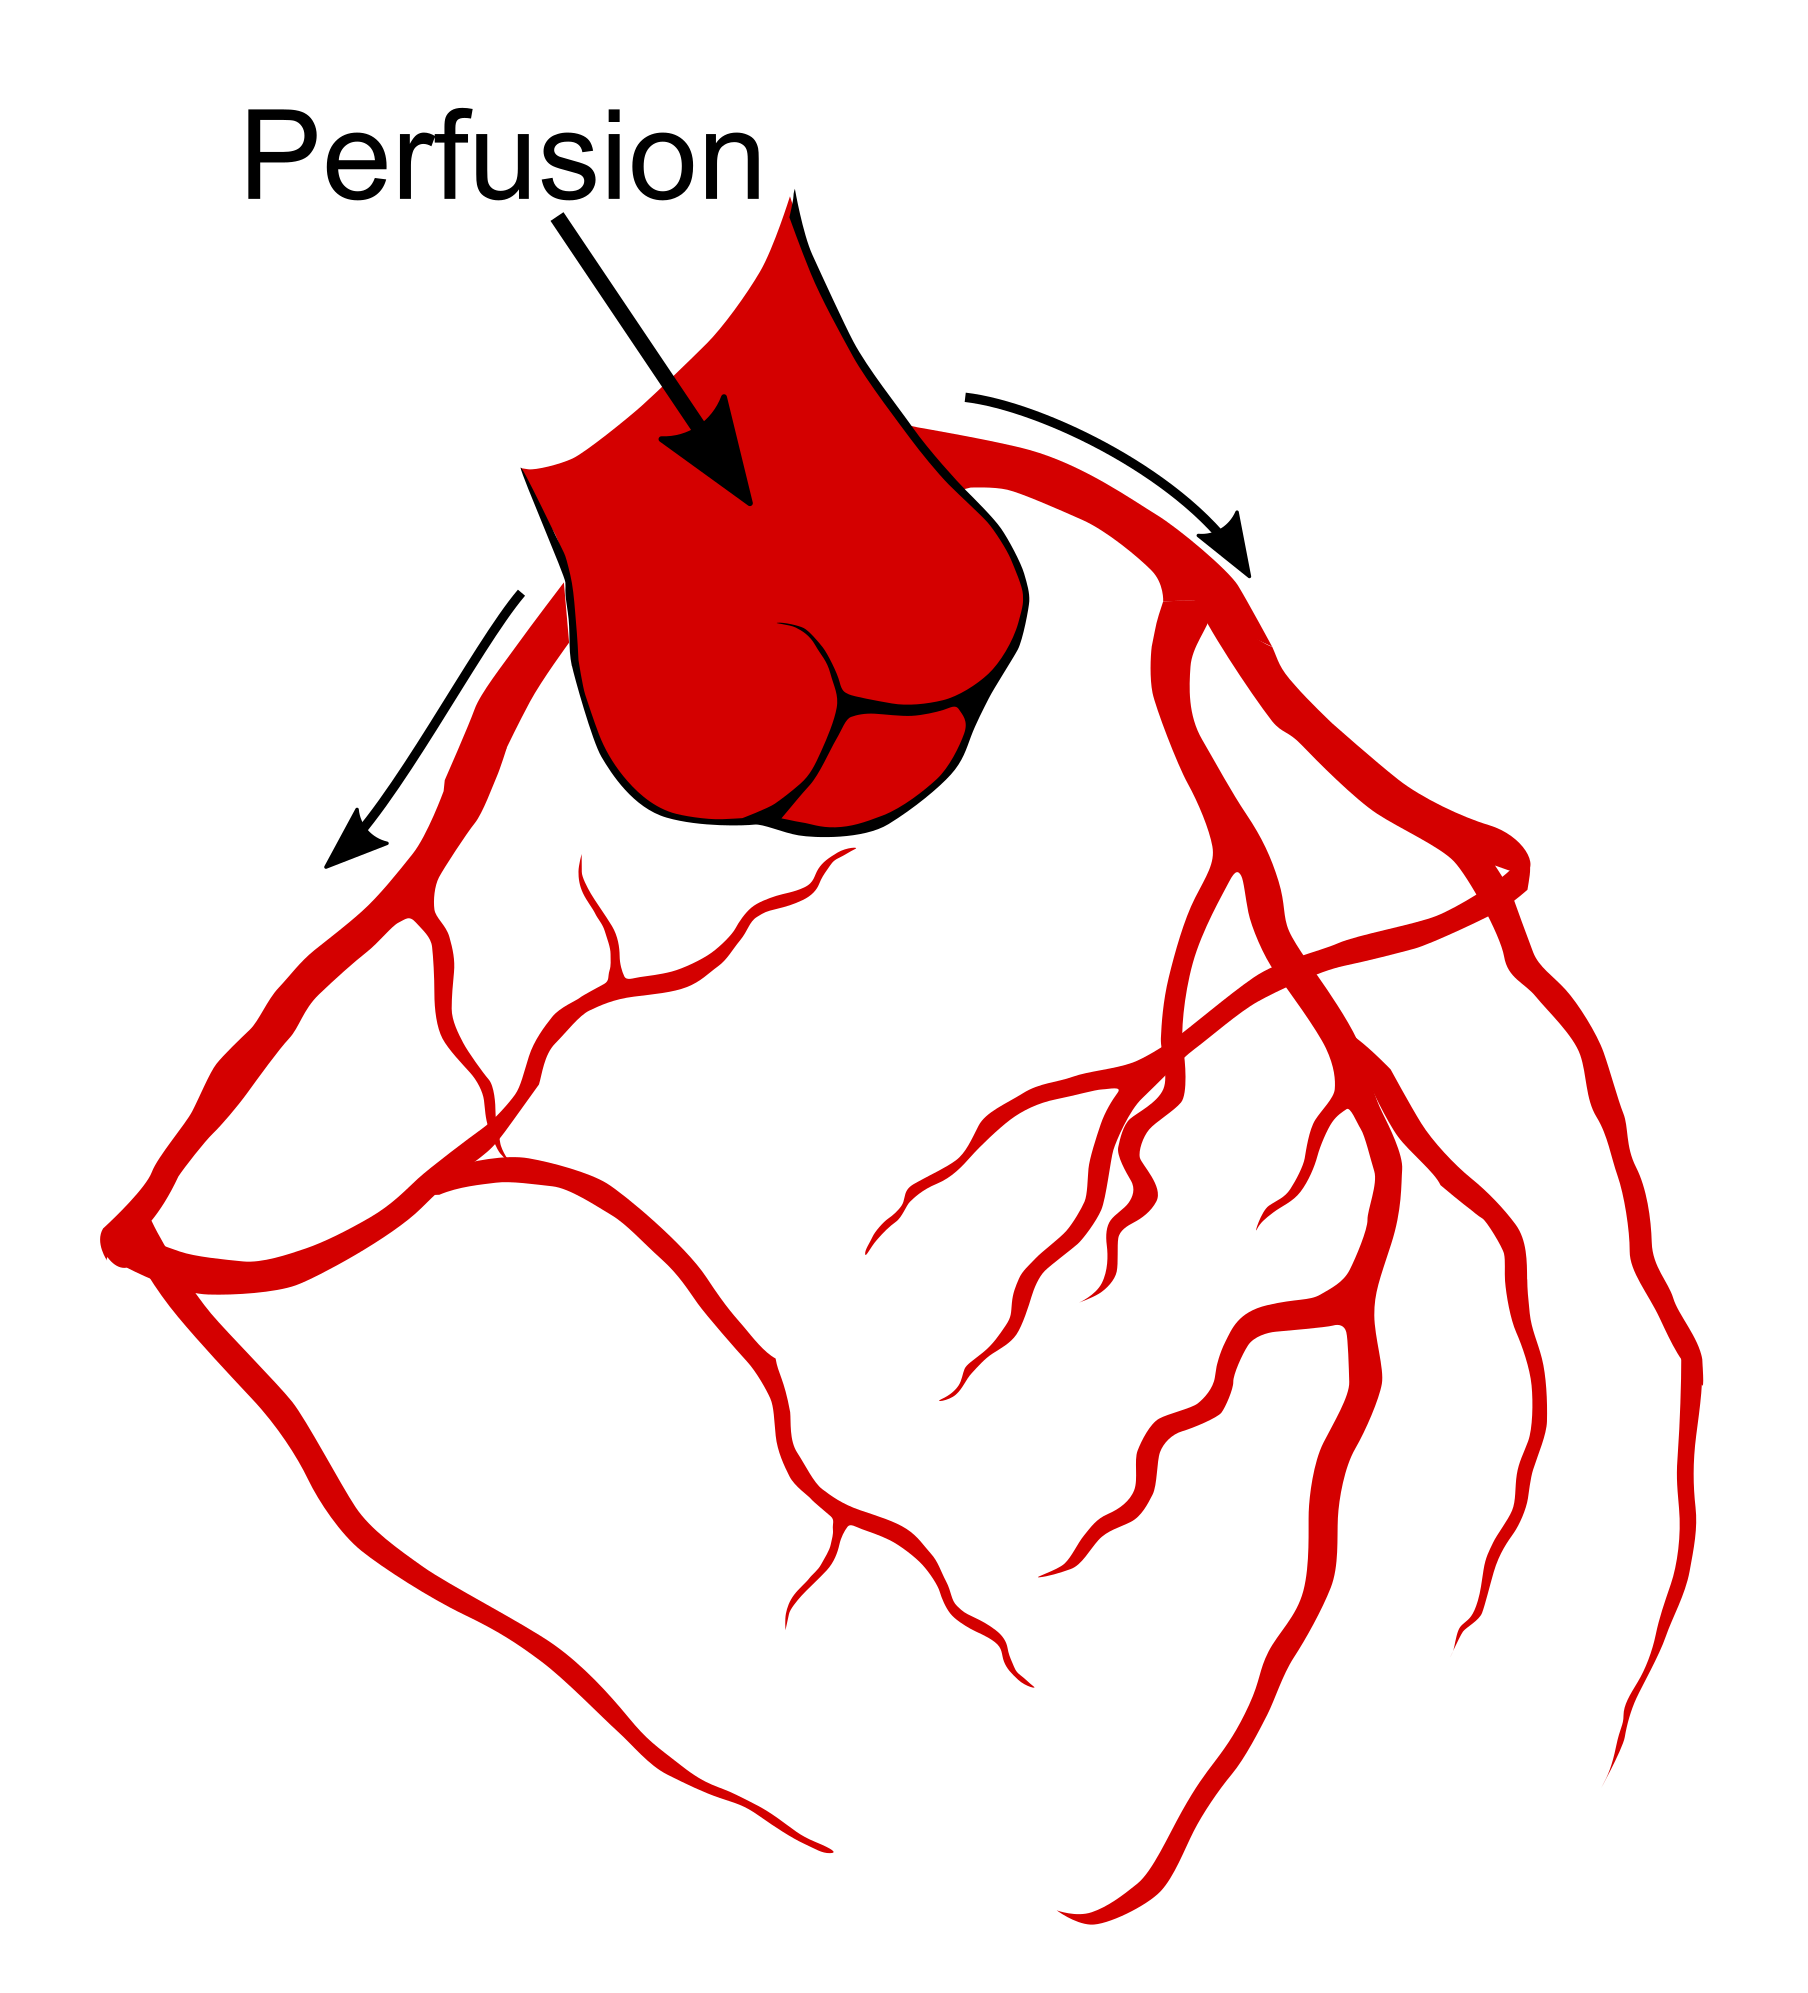 Langendorff perfusion involves retrograde perfusion of the aorta